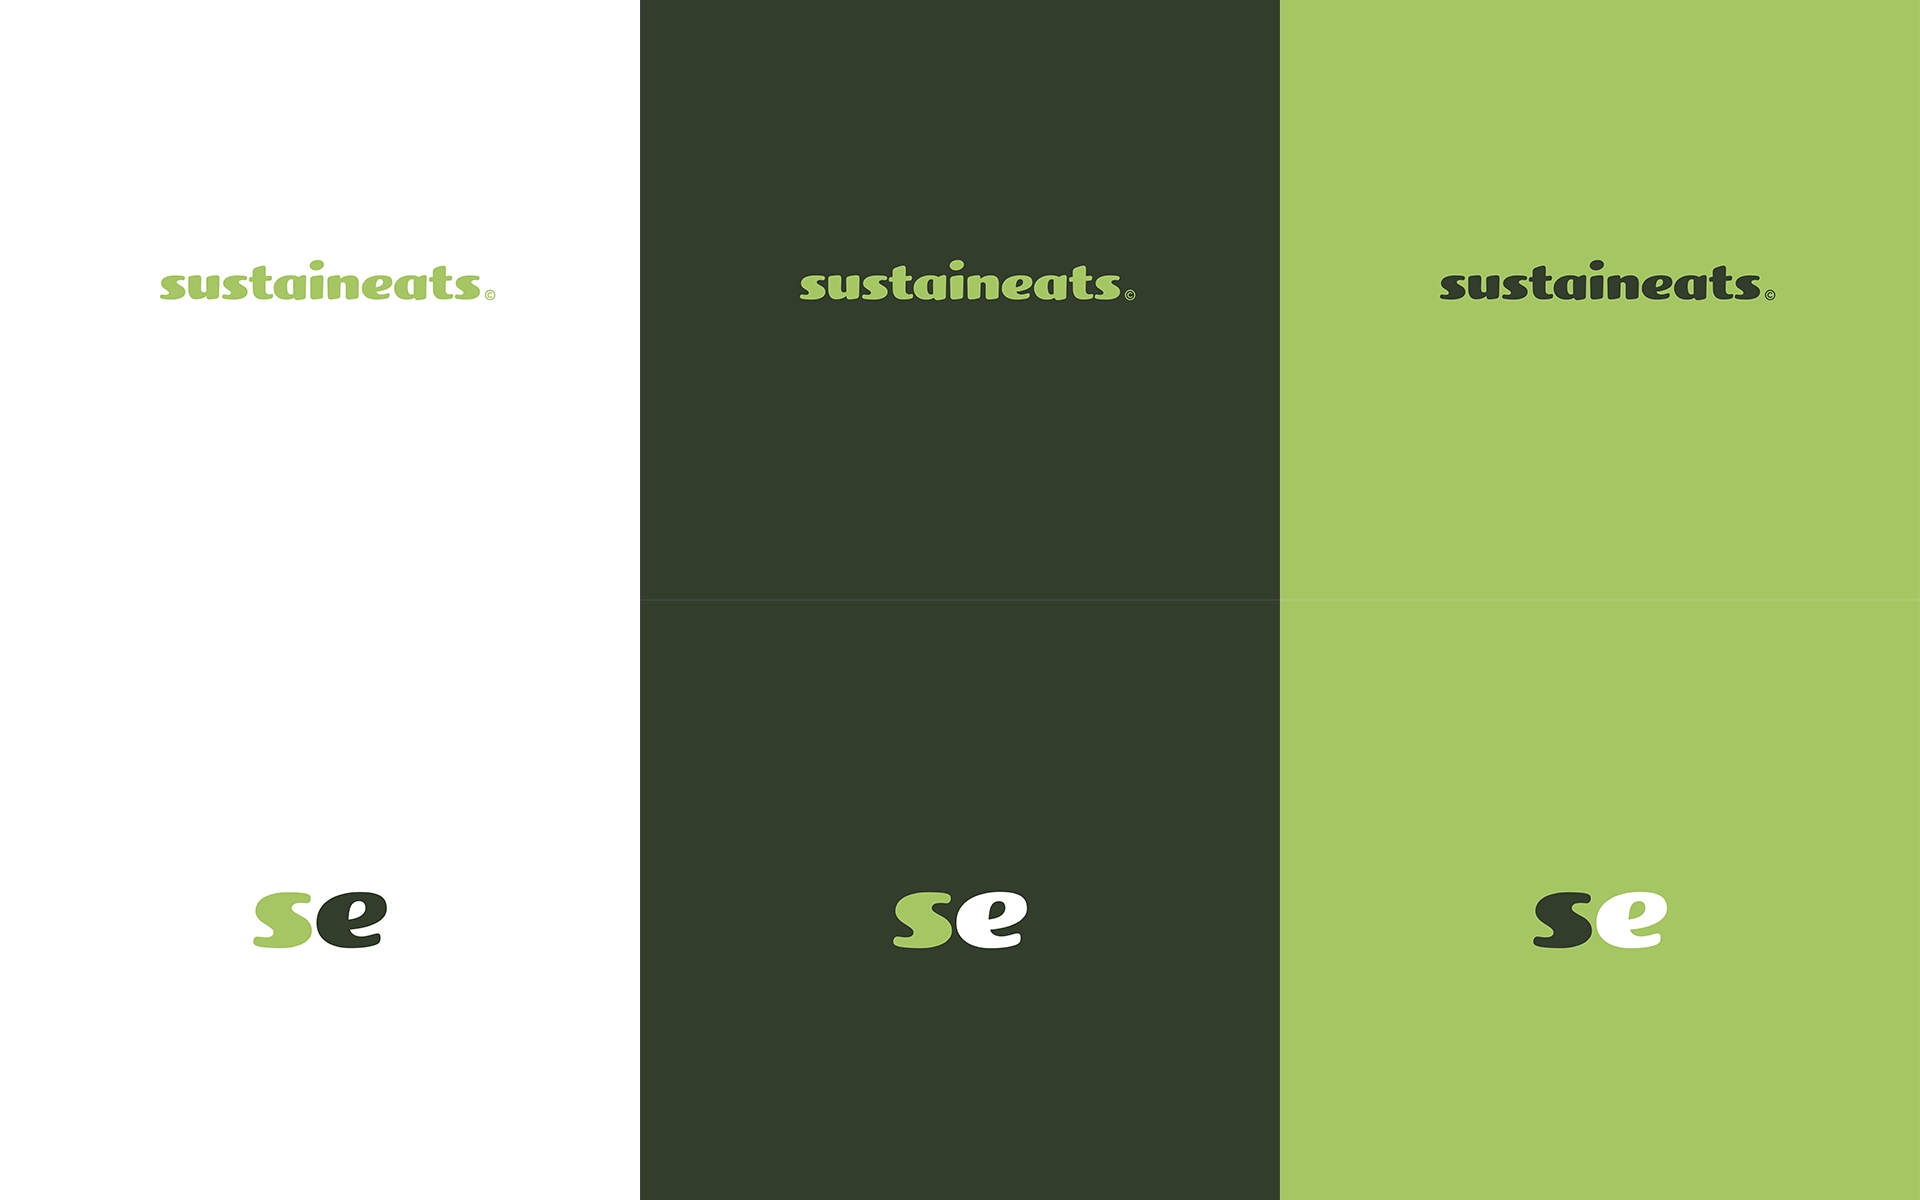 Logotipo da SustainEats monocromatico e versão reduzida do logotipo.